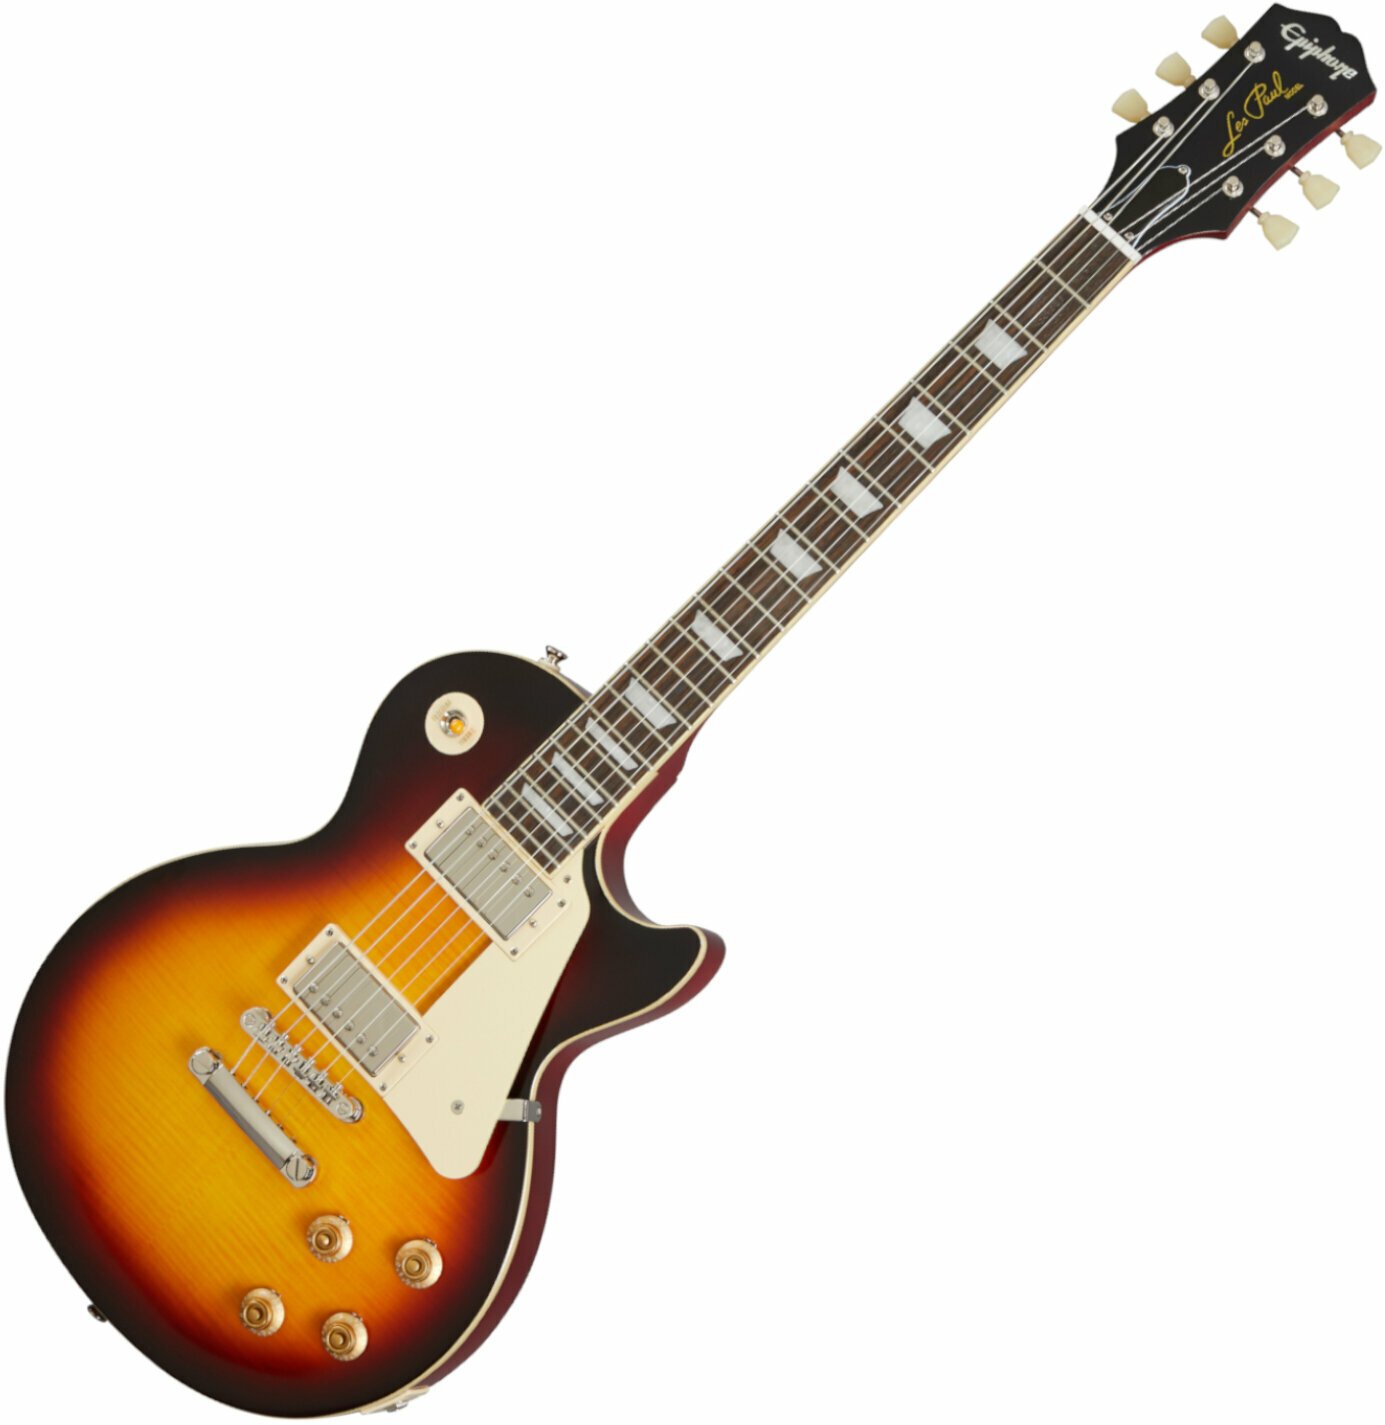 Electric guitar Epiphone 1959 Les Paul Standard (Just unboxed)